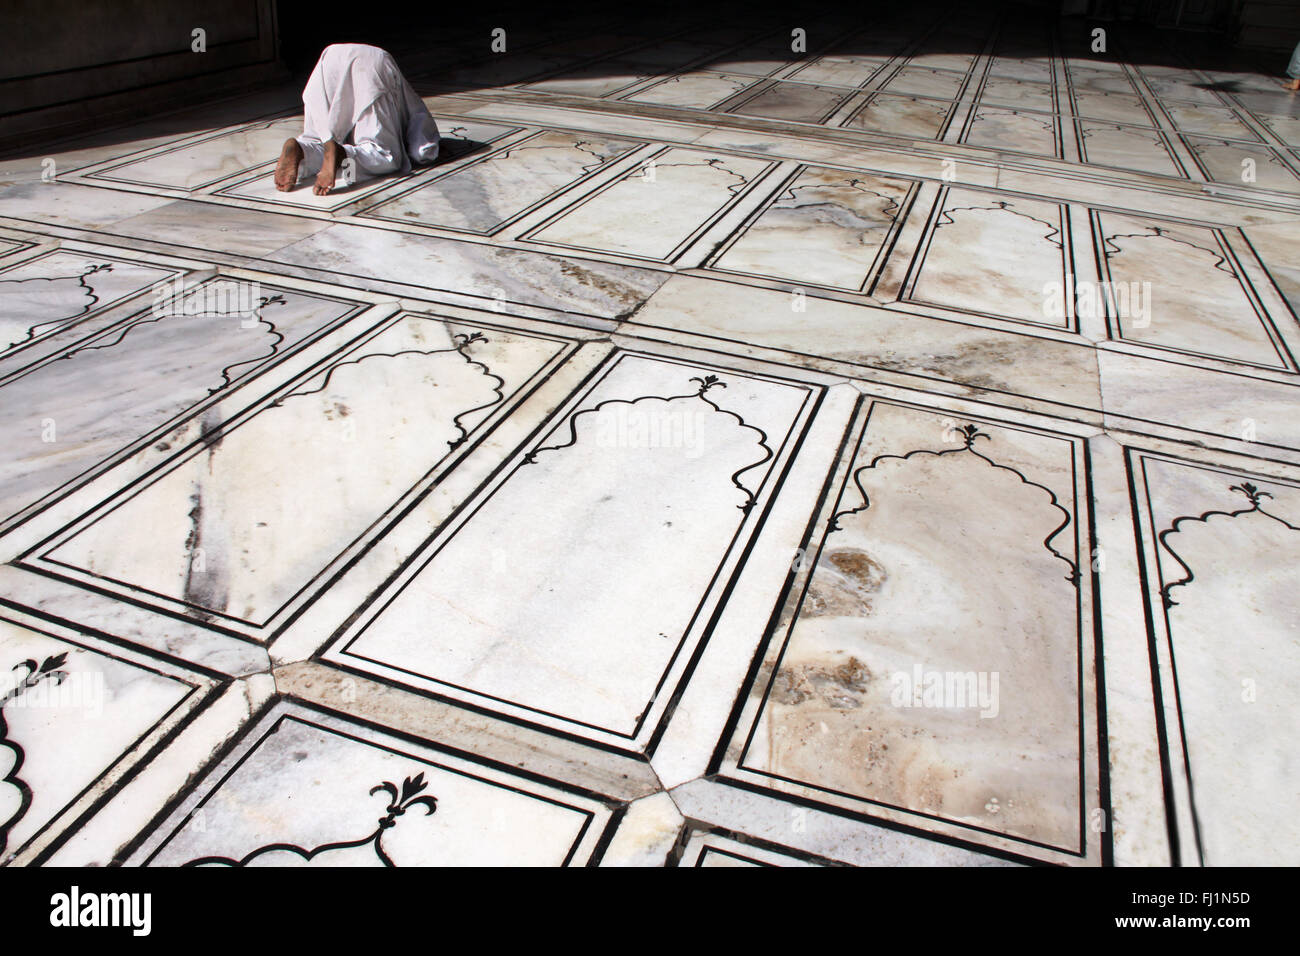 Muslim man praying on the floor in Jama masjid / great mosque of Delhi, India Stock Photo